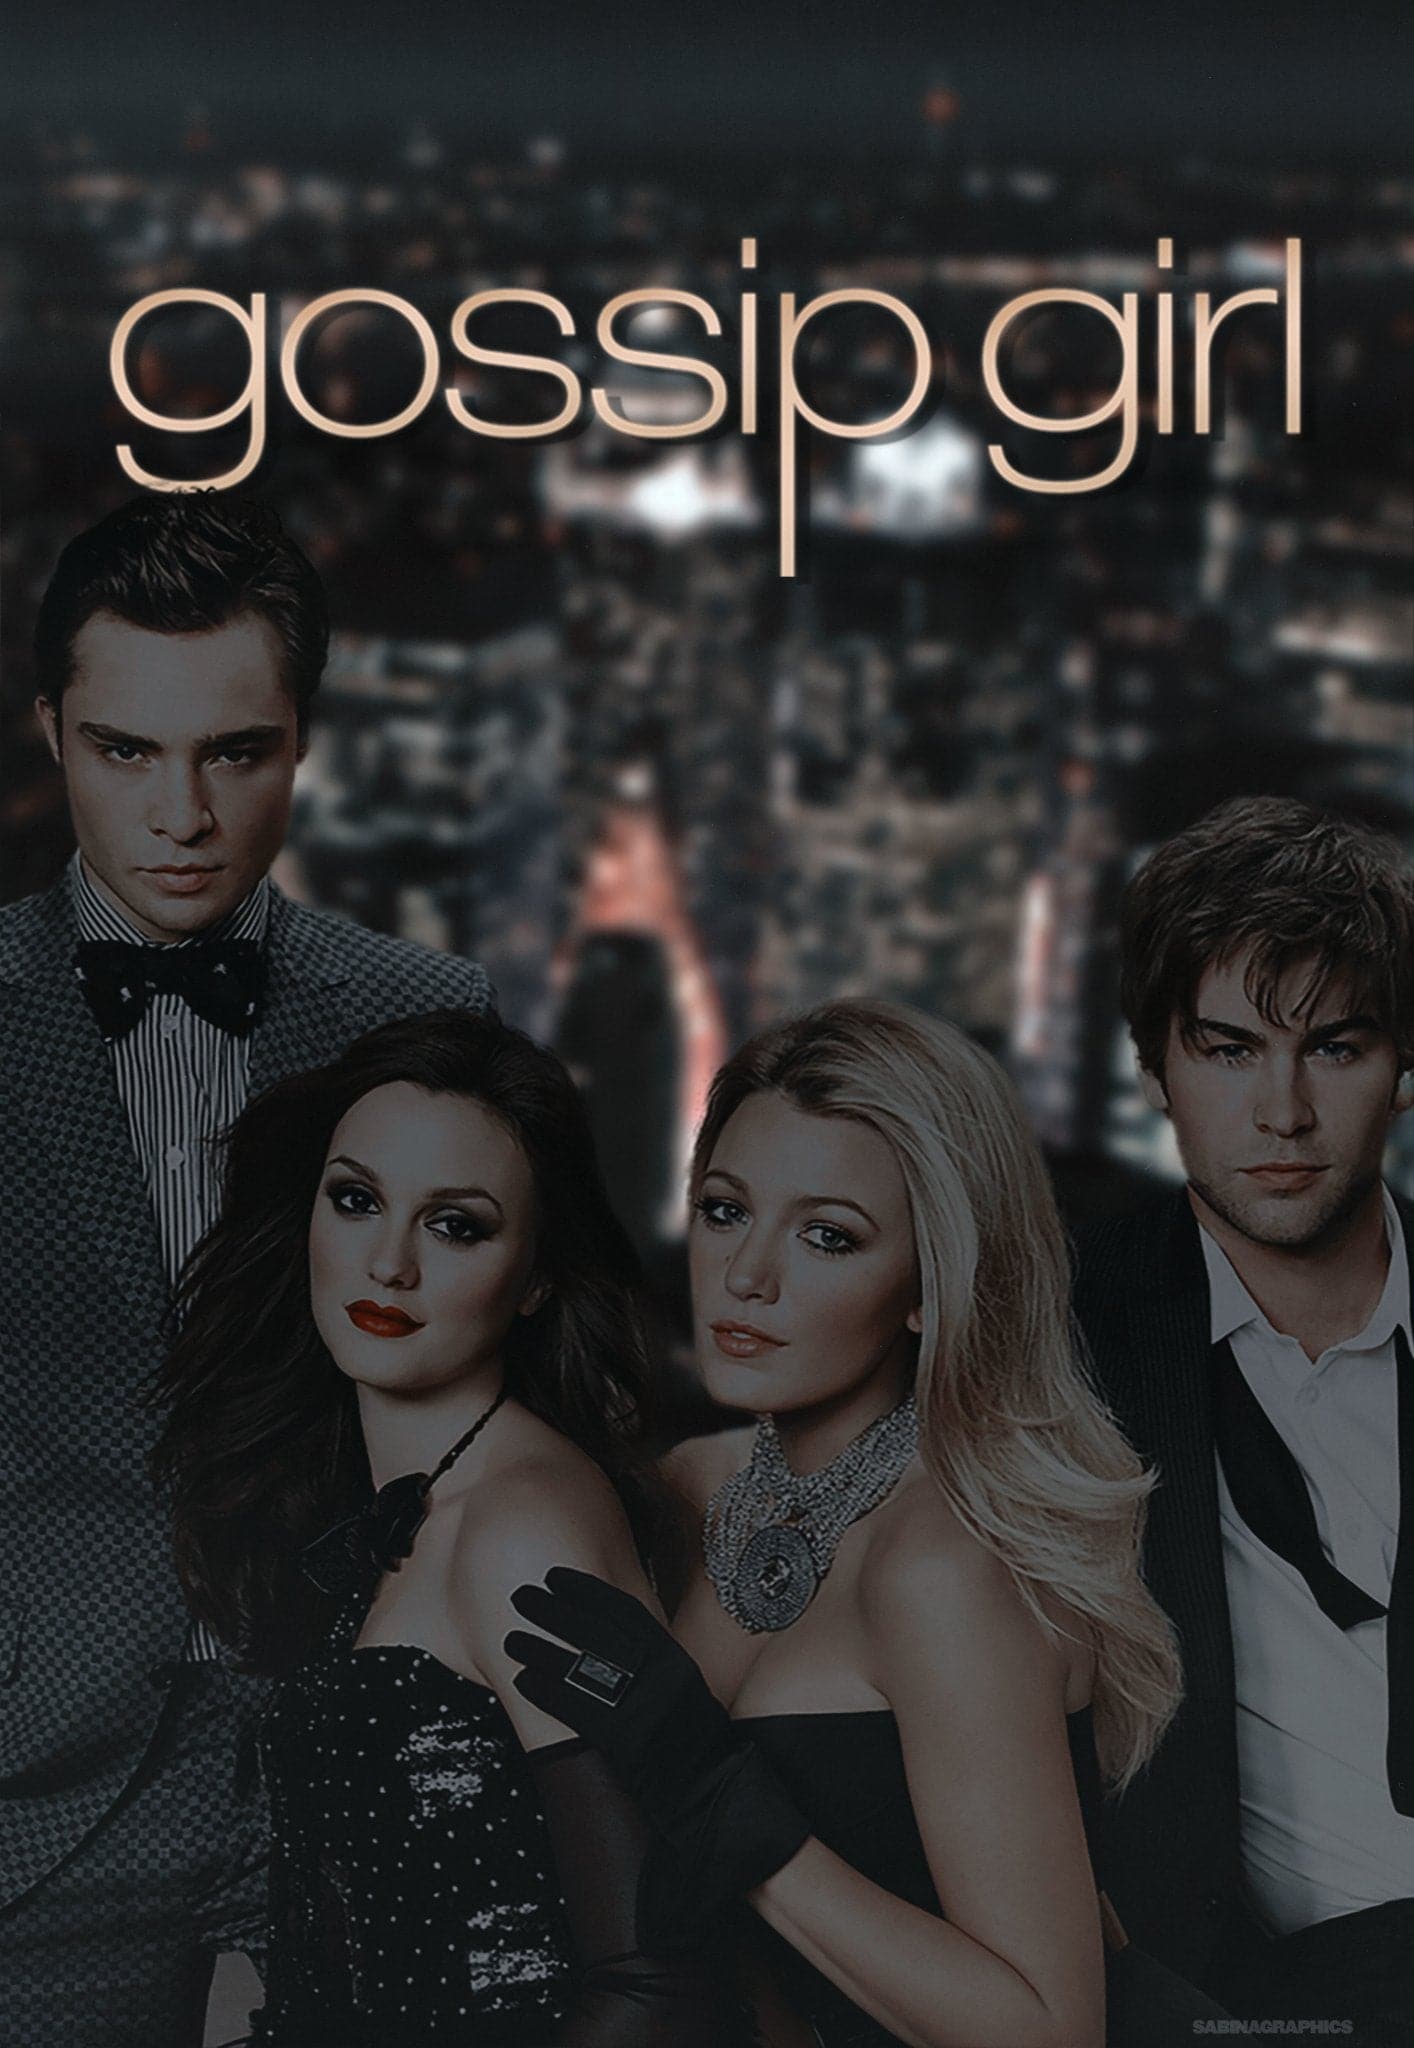 gossip girl poster